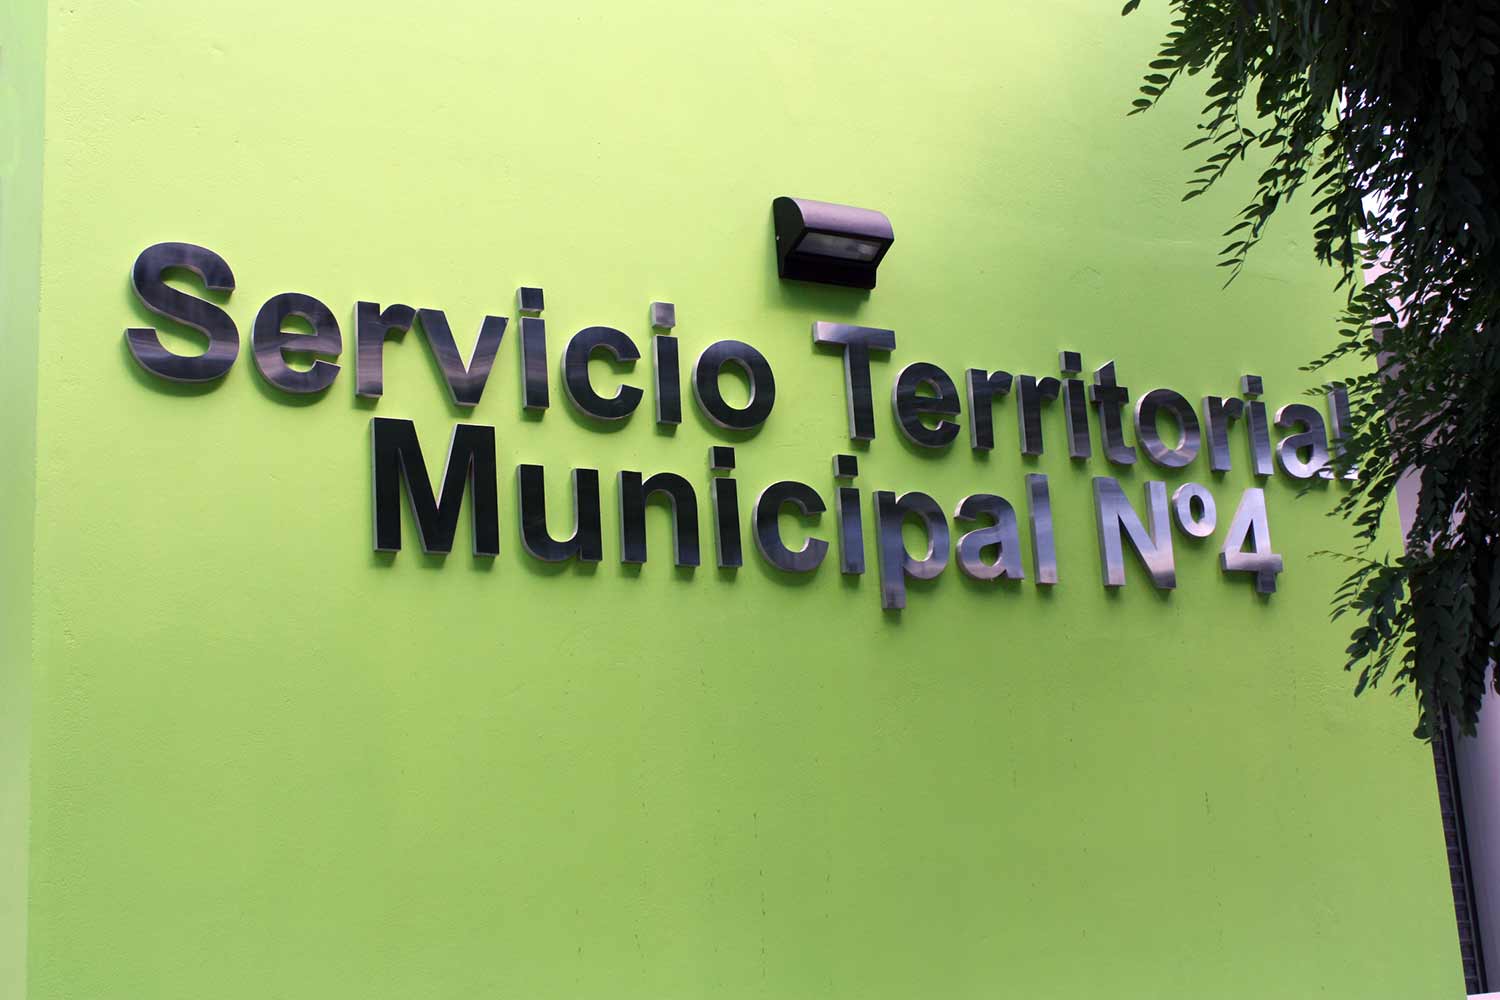 Servicio Territorial Municipal N°4